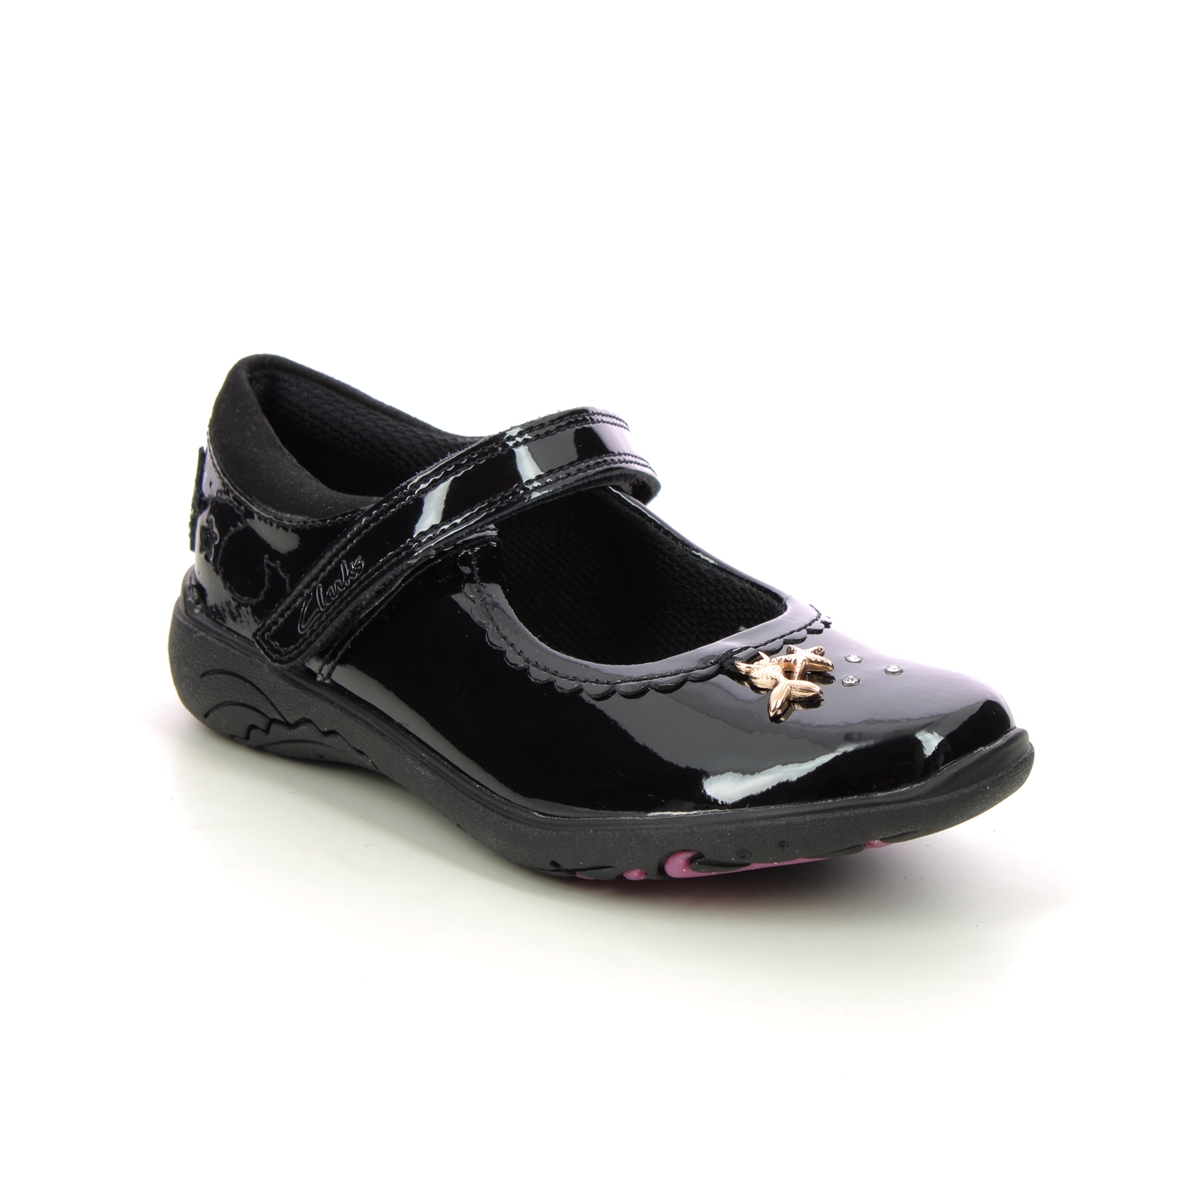 Clarks Relda Sea K Mary Jane Black Patent Kids Girls School Shoes 722417G In Size 8.5 In Plain Black Patent G Width Fitting For School For kids